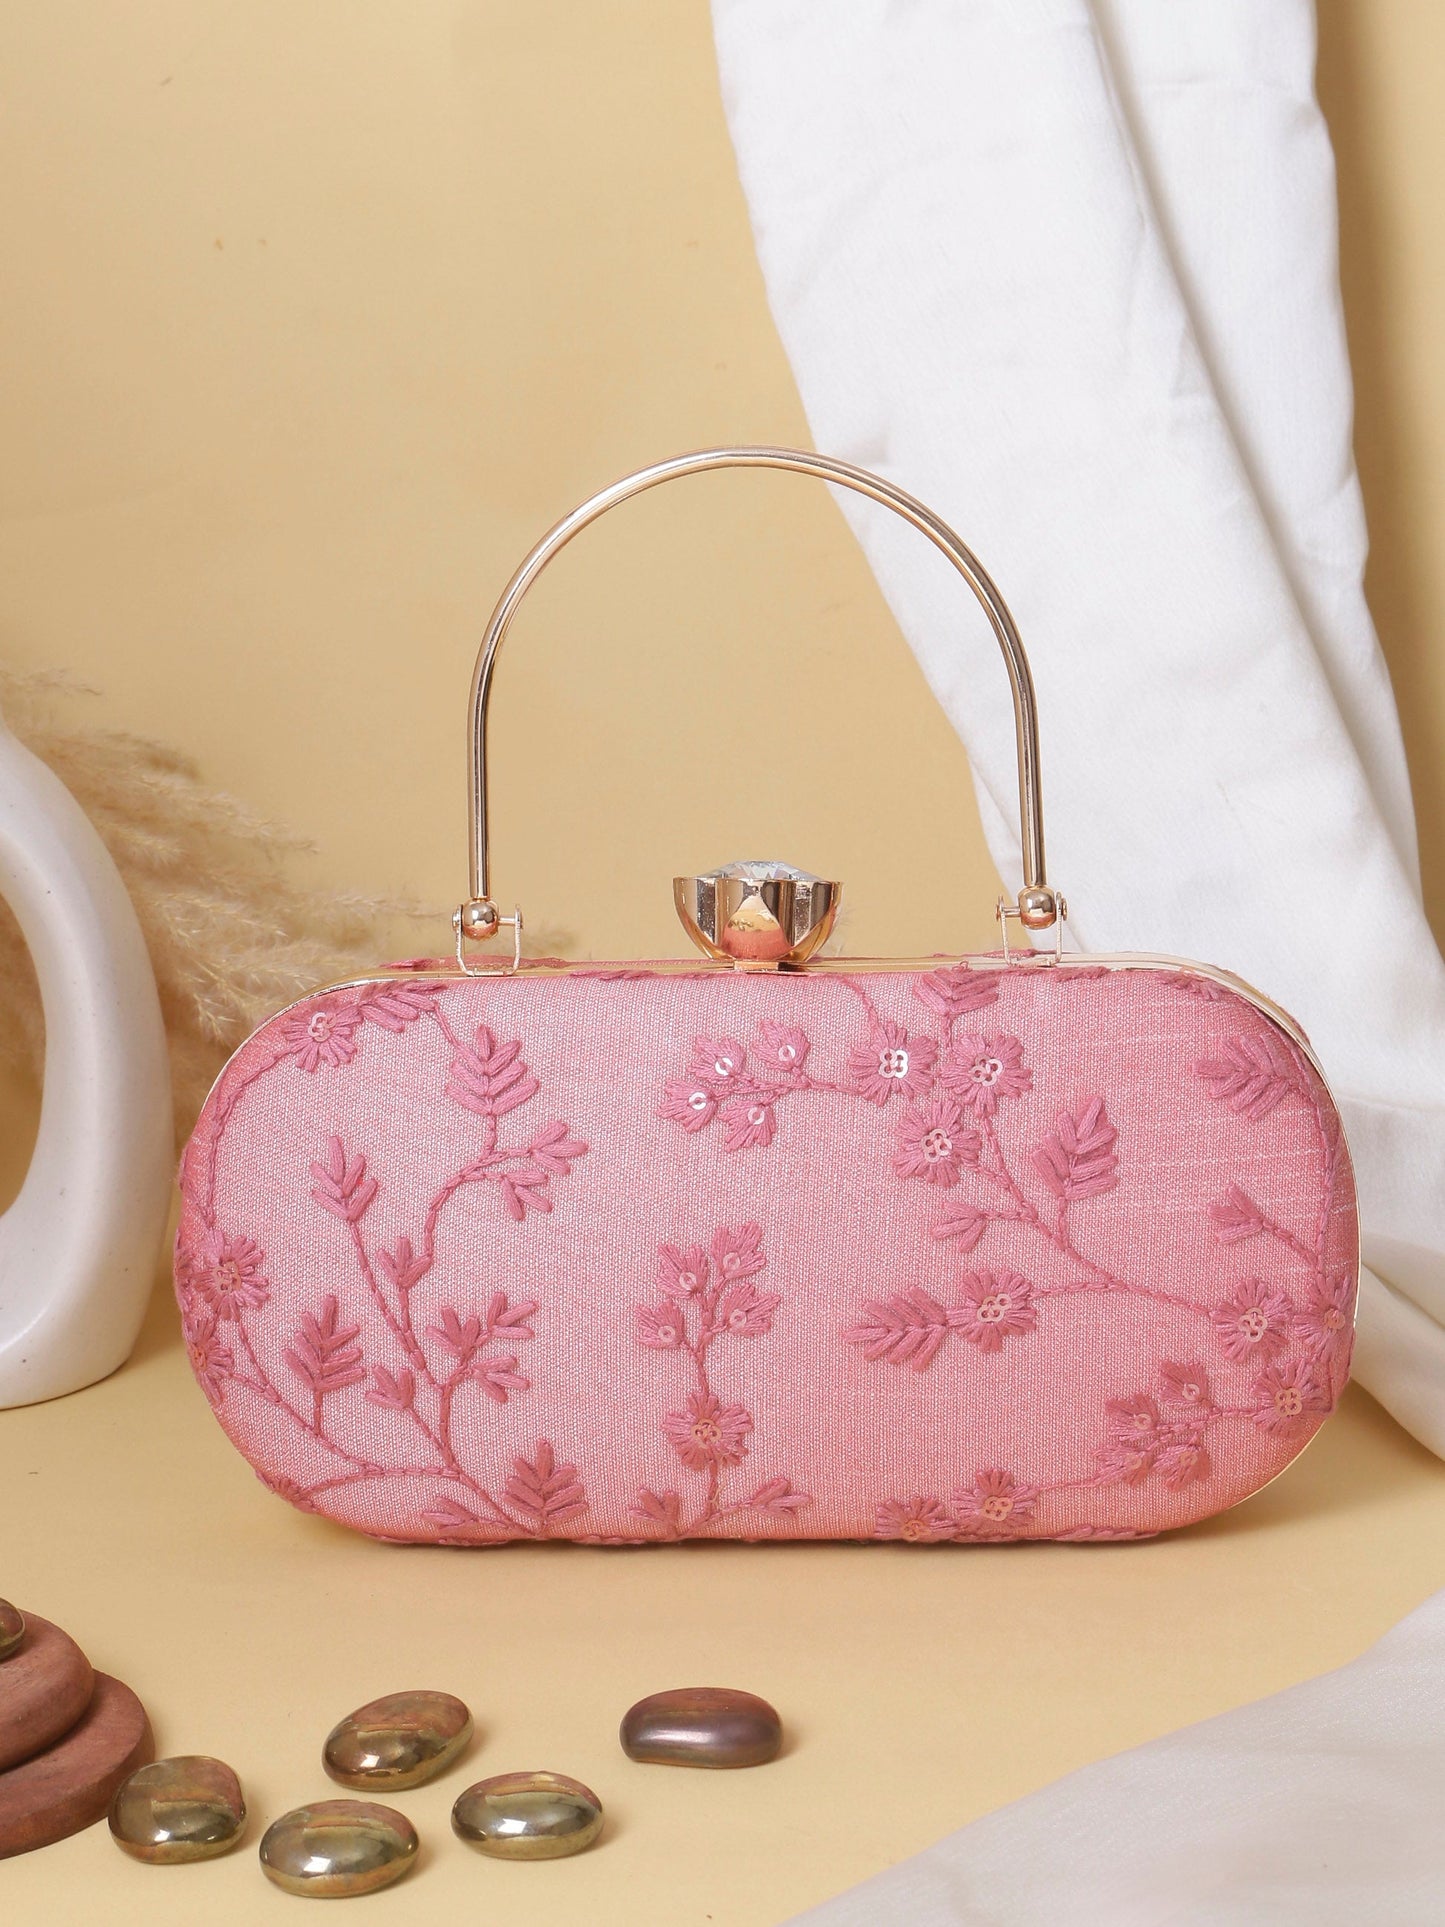 Swisni pink classic clutch bag